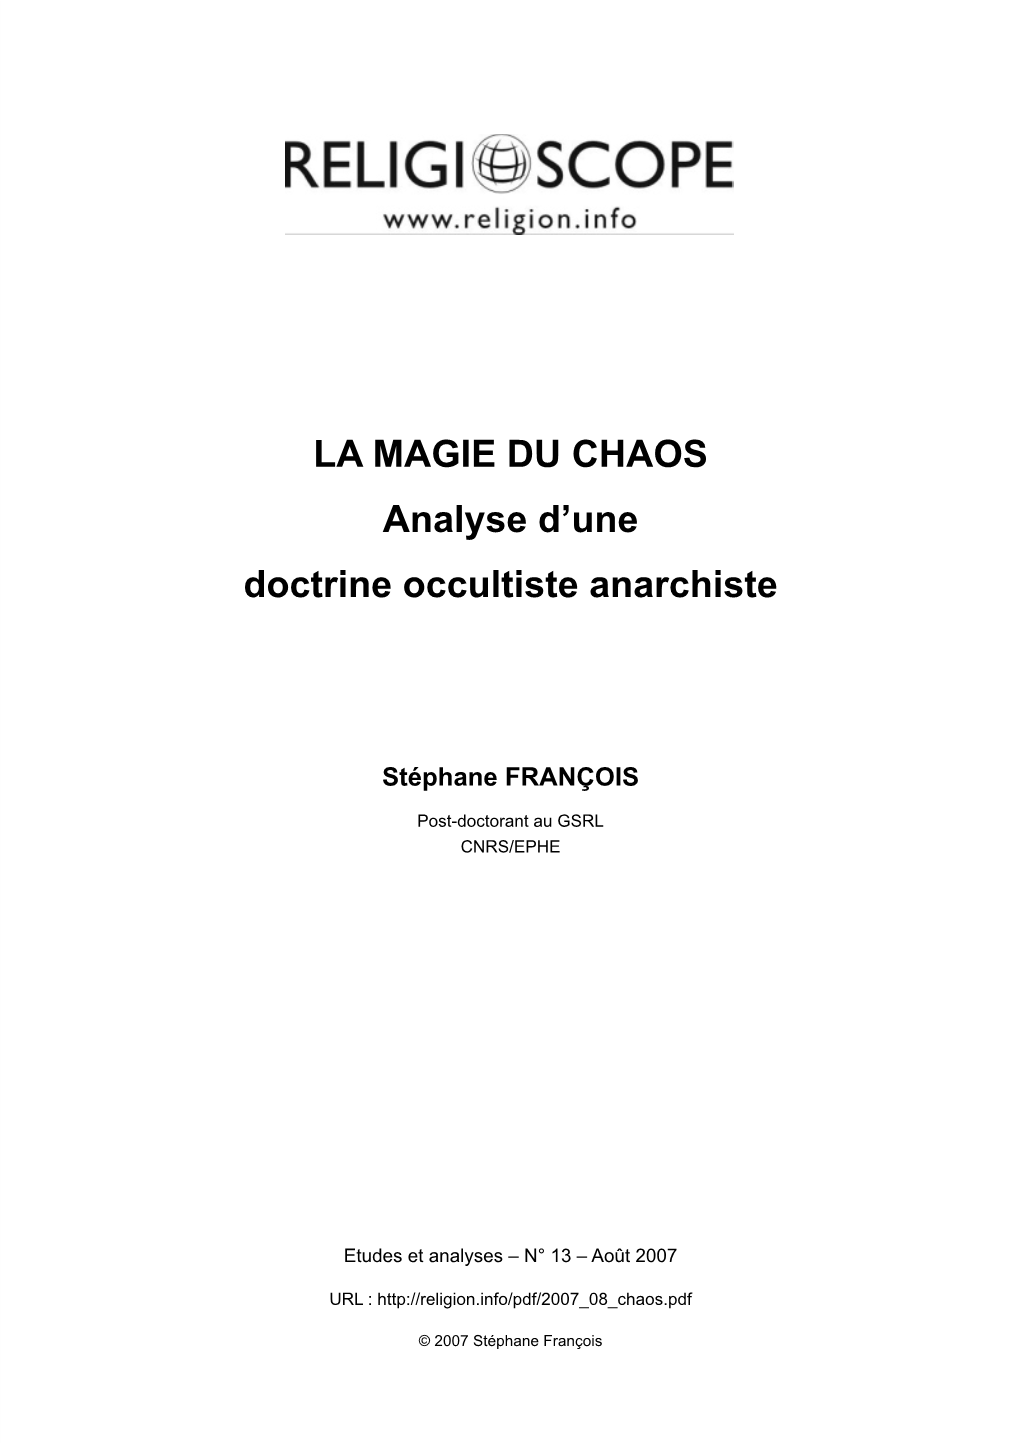 La Magie Du Chaos: Analyse D'une Doctrine Occultiste Anarchiste